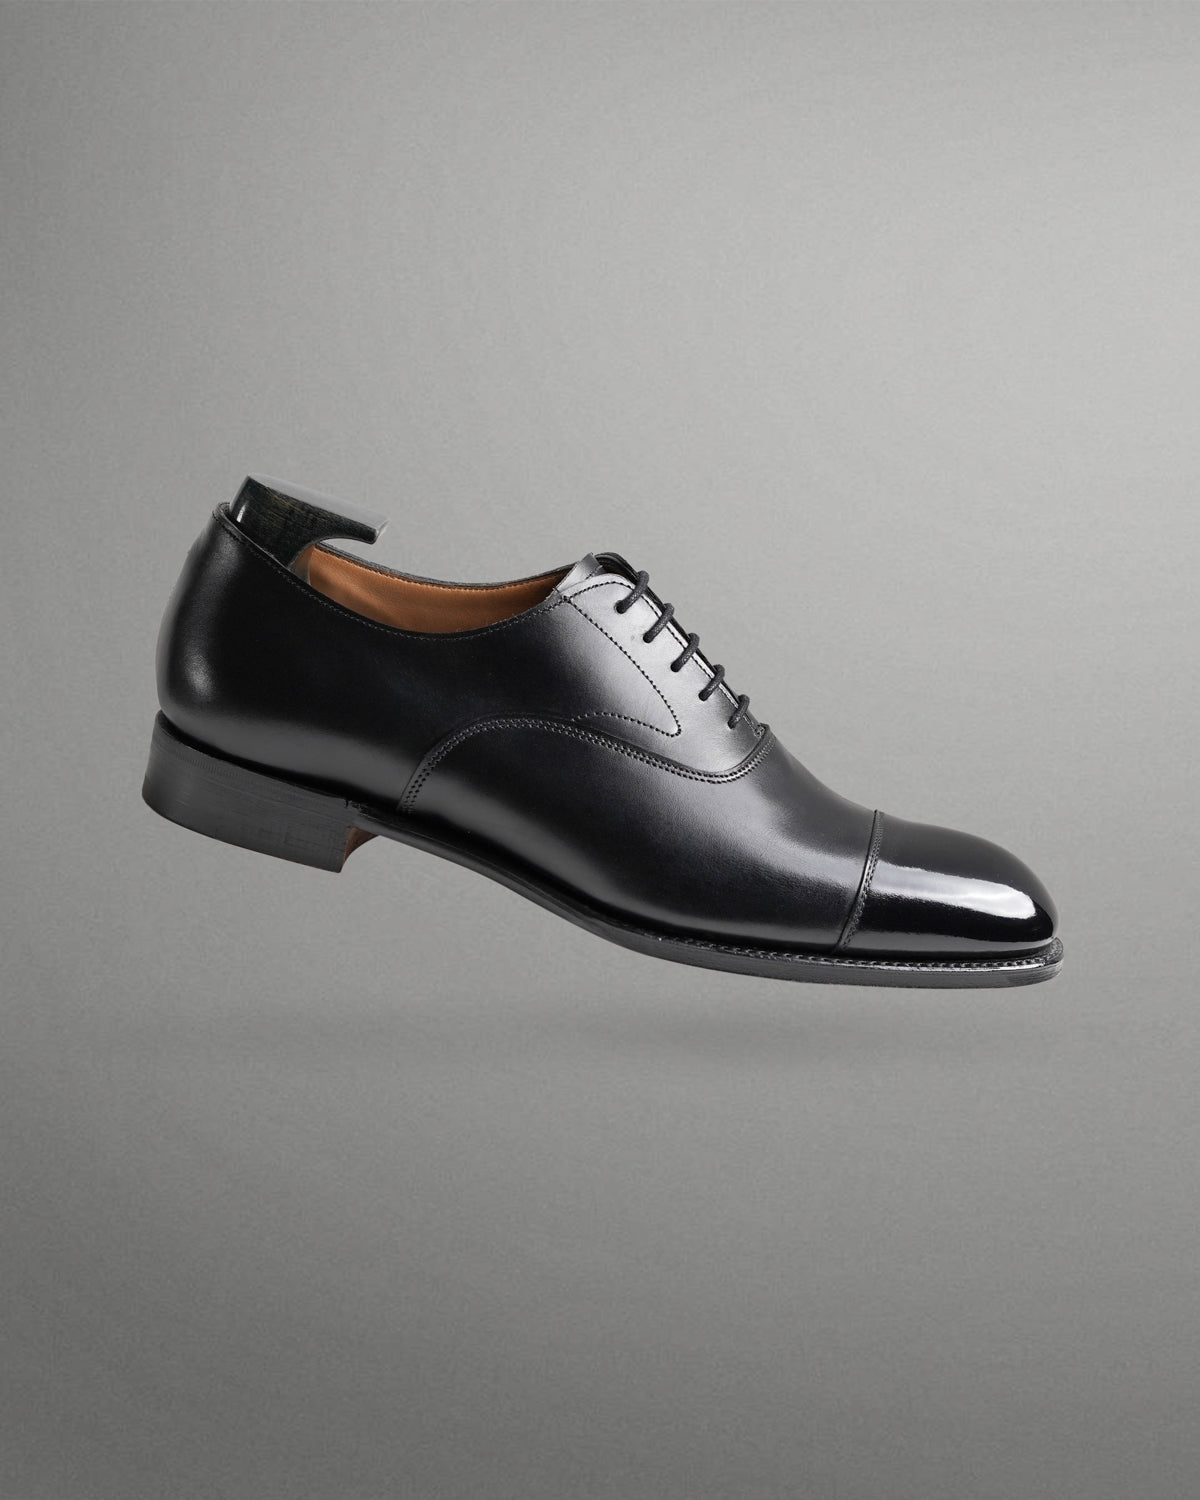 Joseph Cheaney Alfred Cap Toe Oxford in Black Calf – Mason and Smith Shoe  Salon - Providing quality footwear